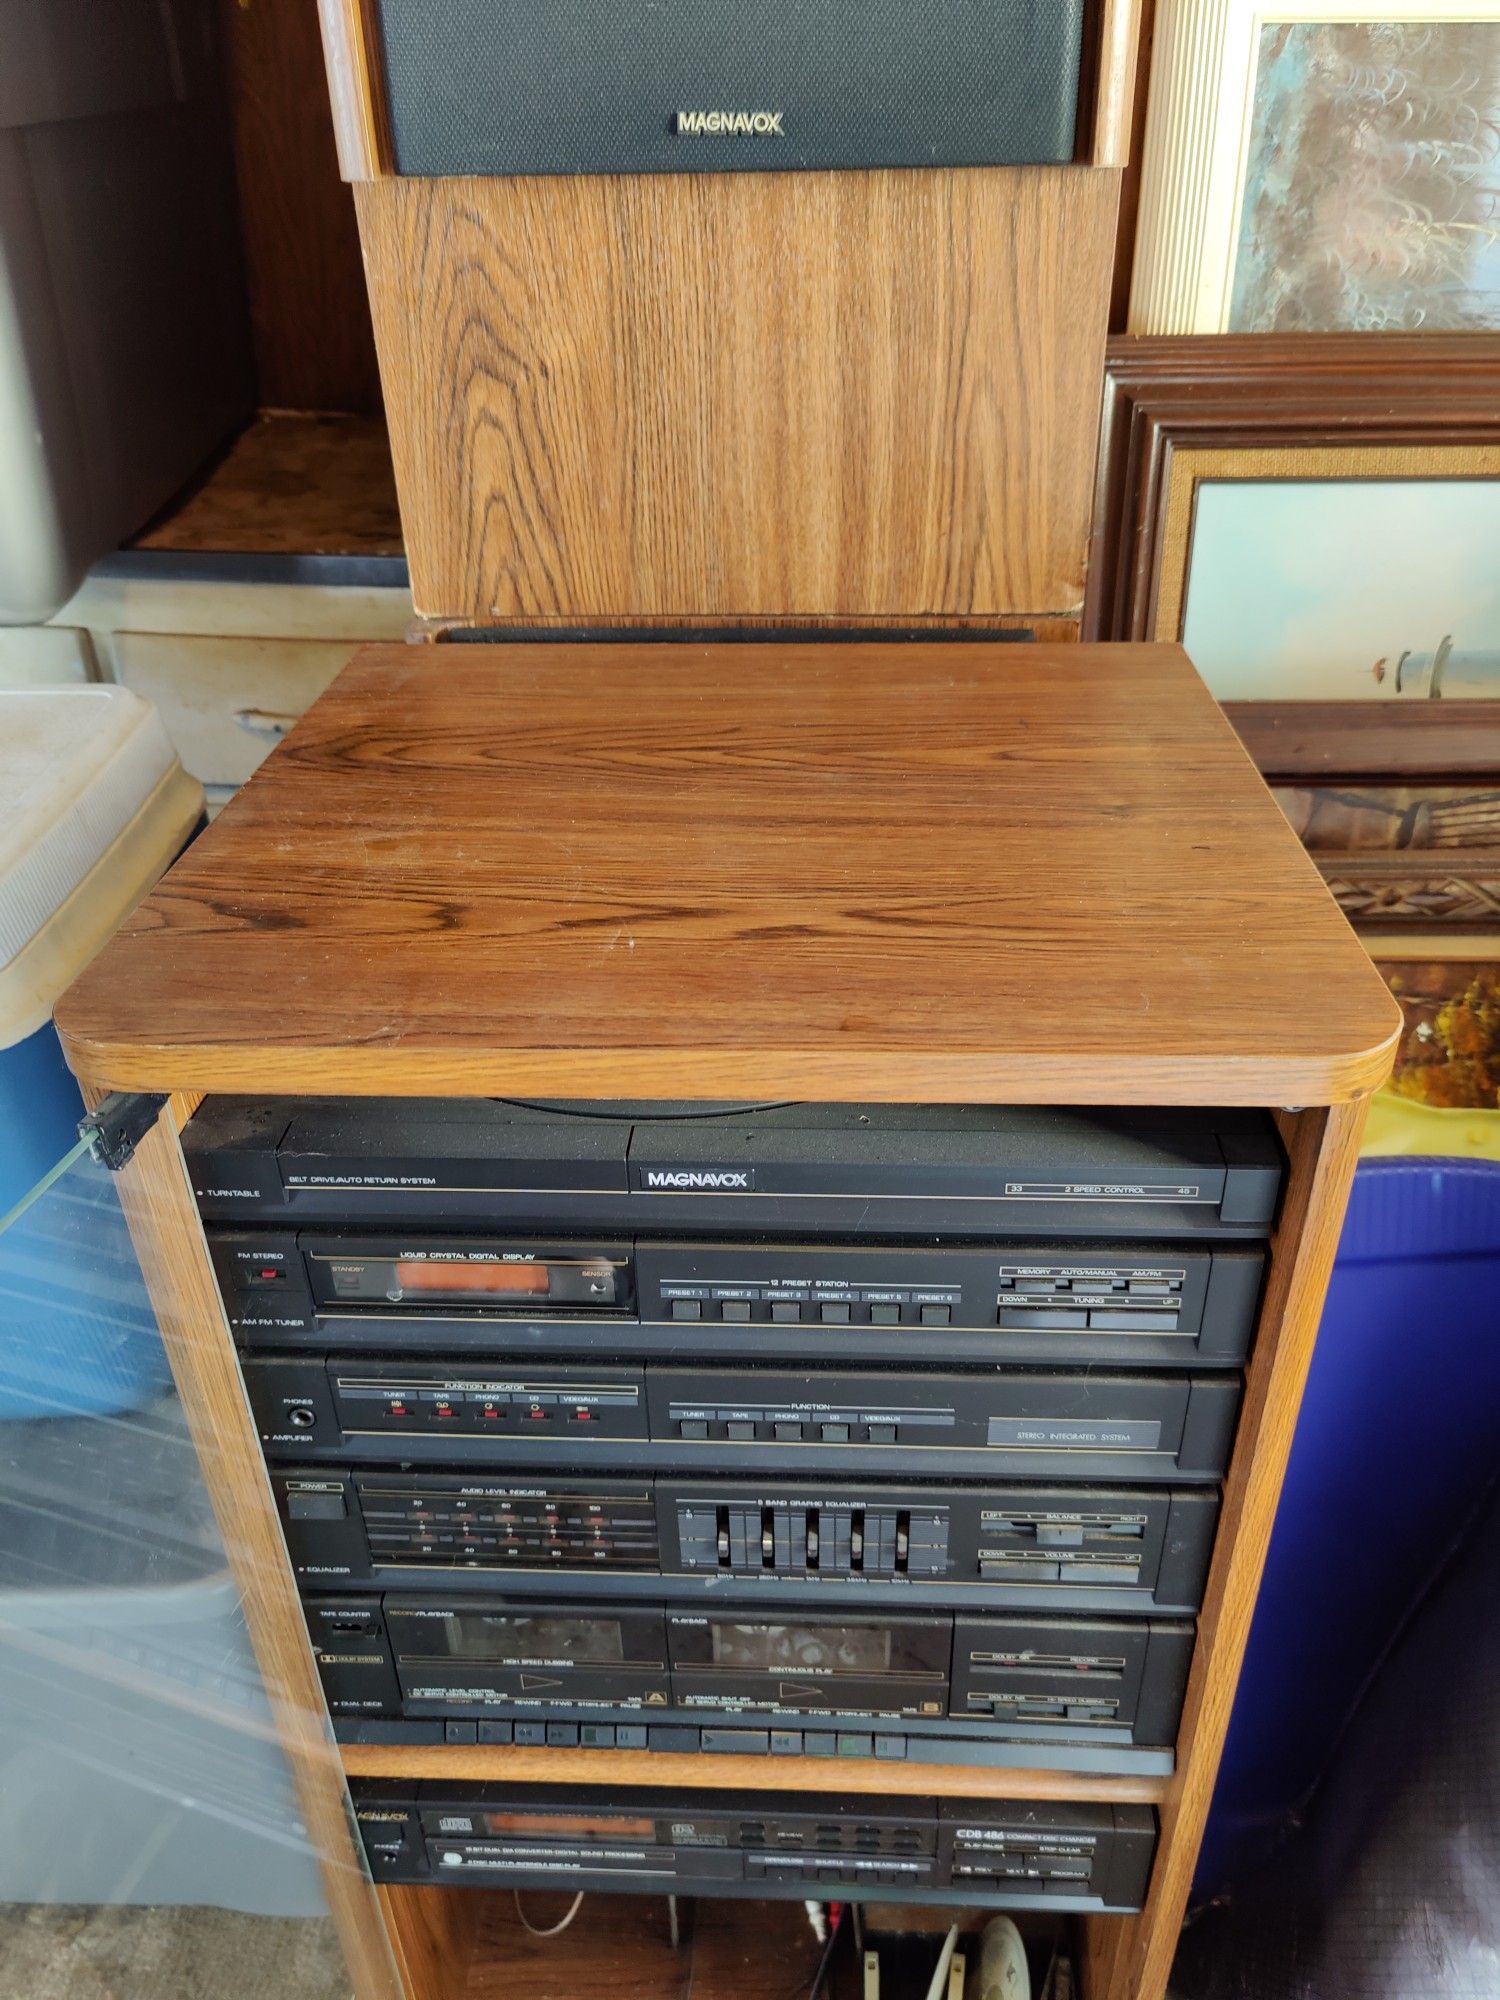 Magnavox stereo system